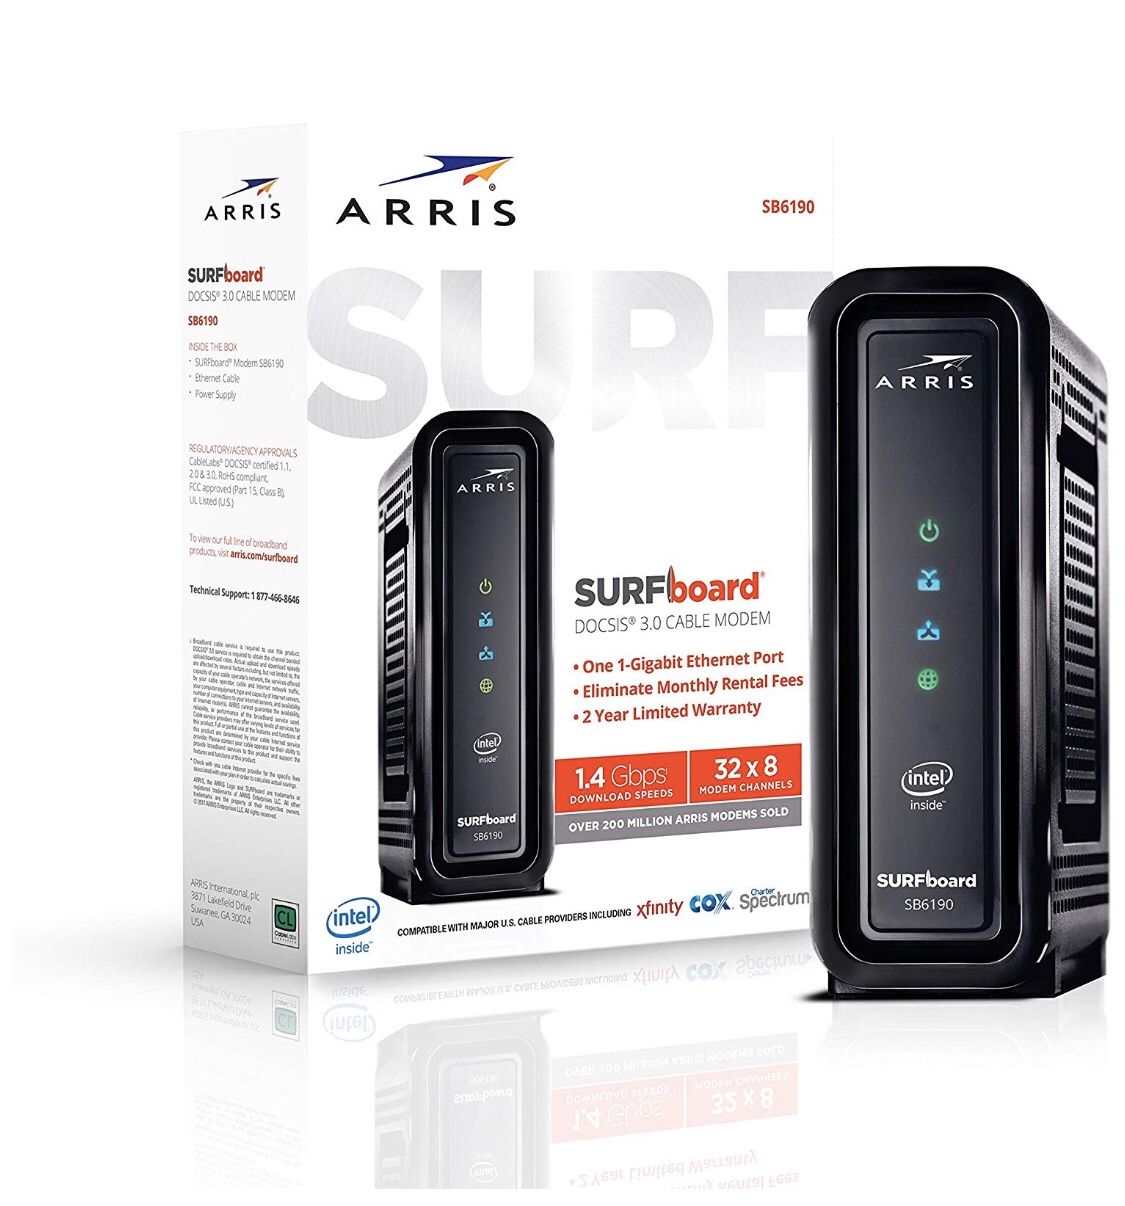 ARRIS Surfboard SB6190 1.4 Gbps Comcast Xfinity Modem